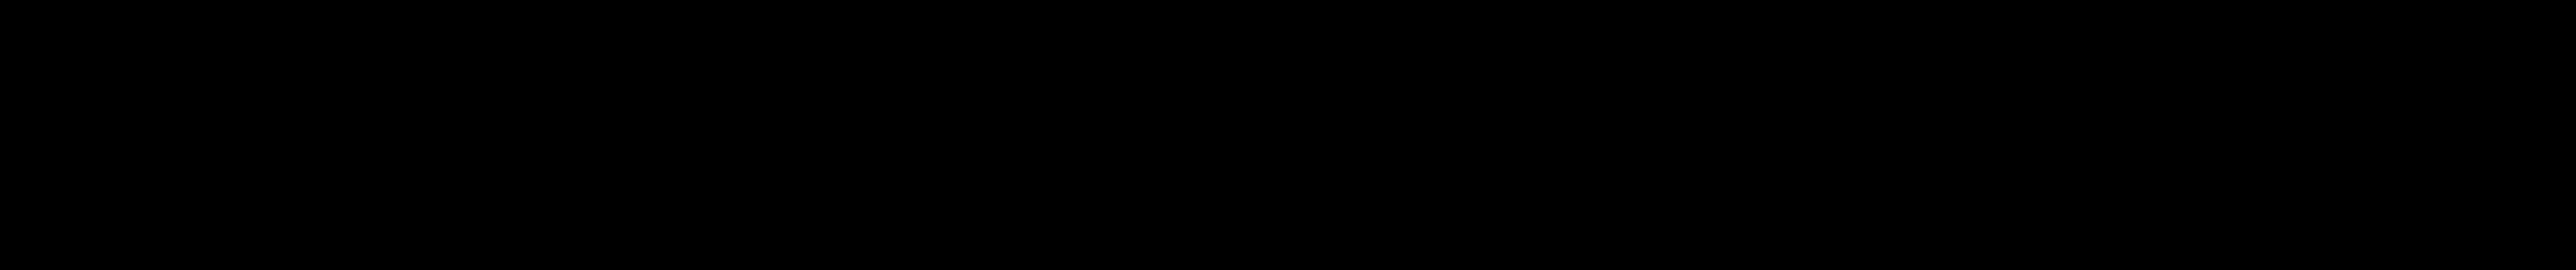 Jeroen Claus's profile banner